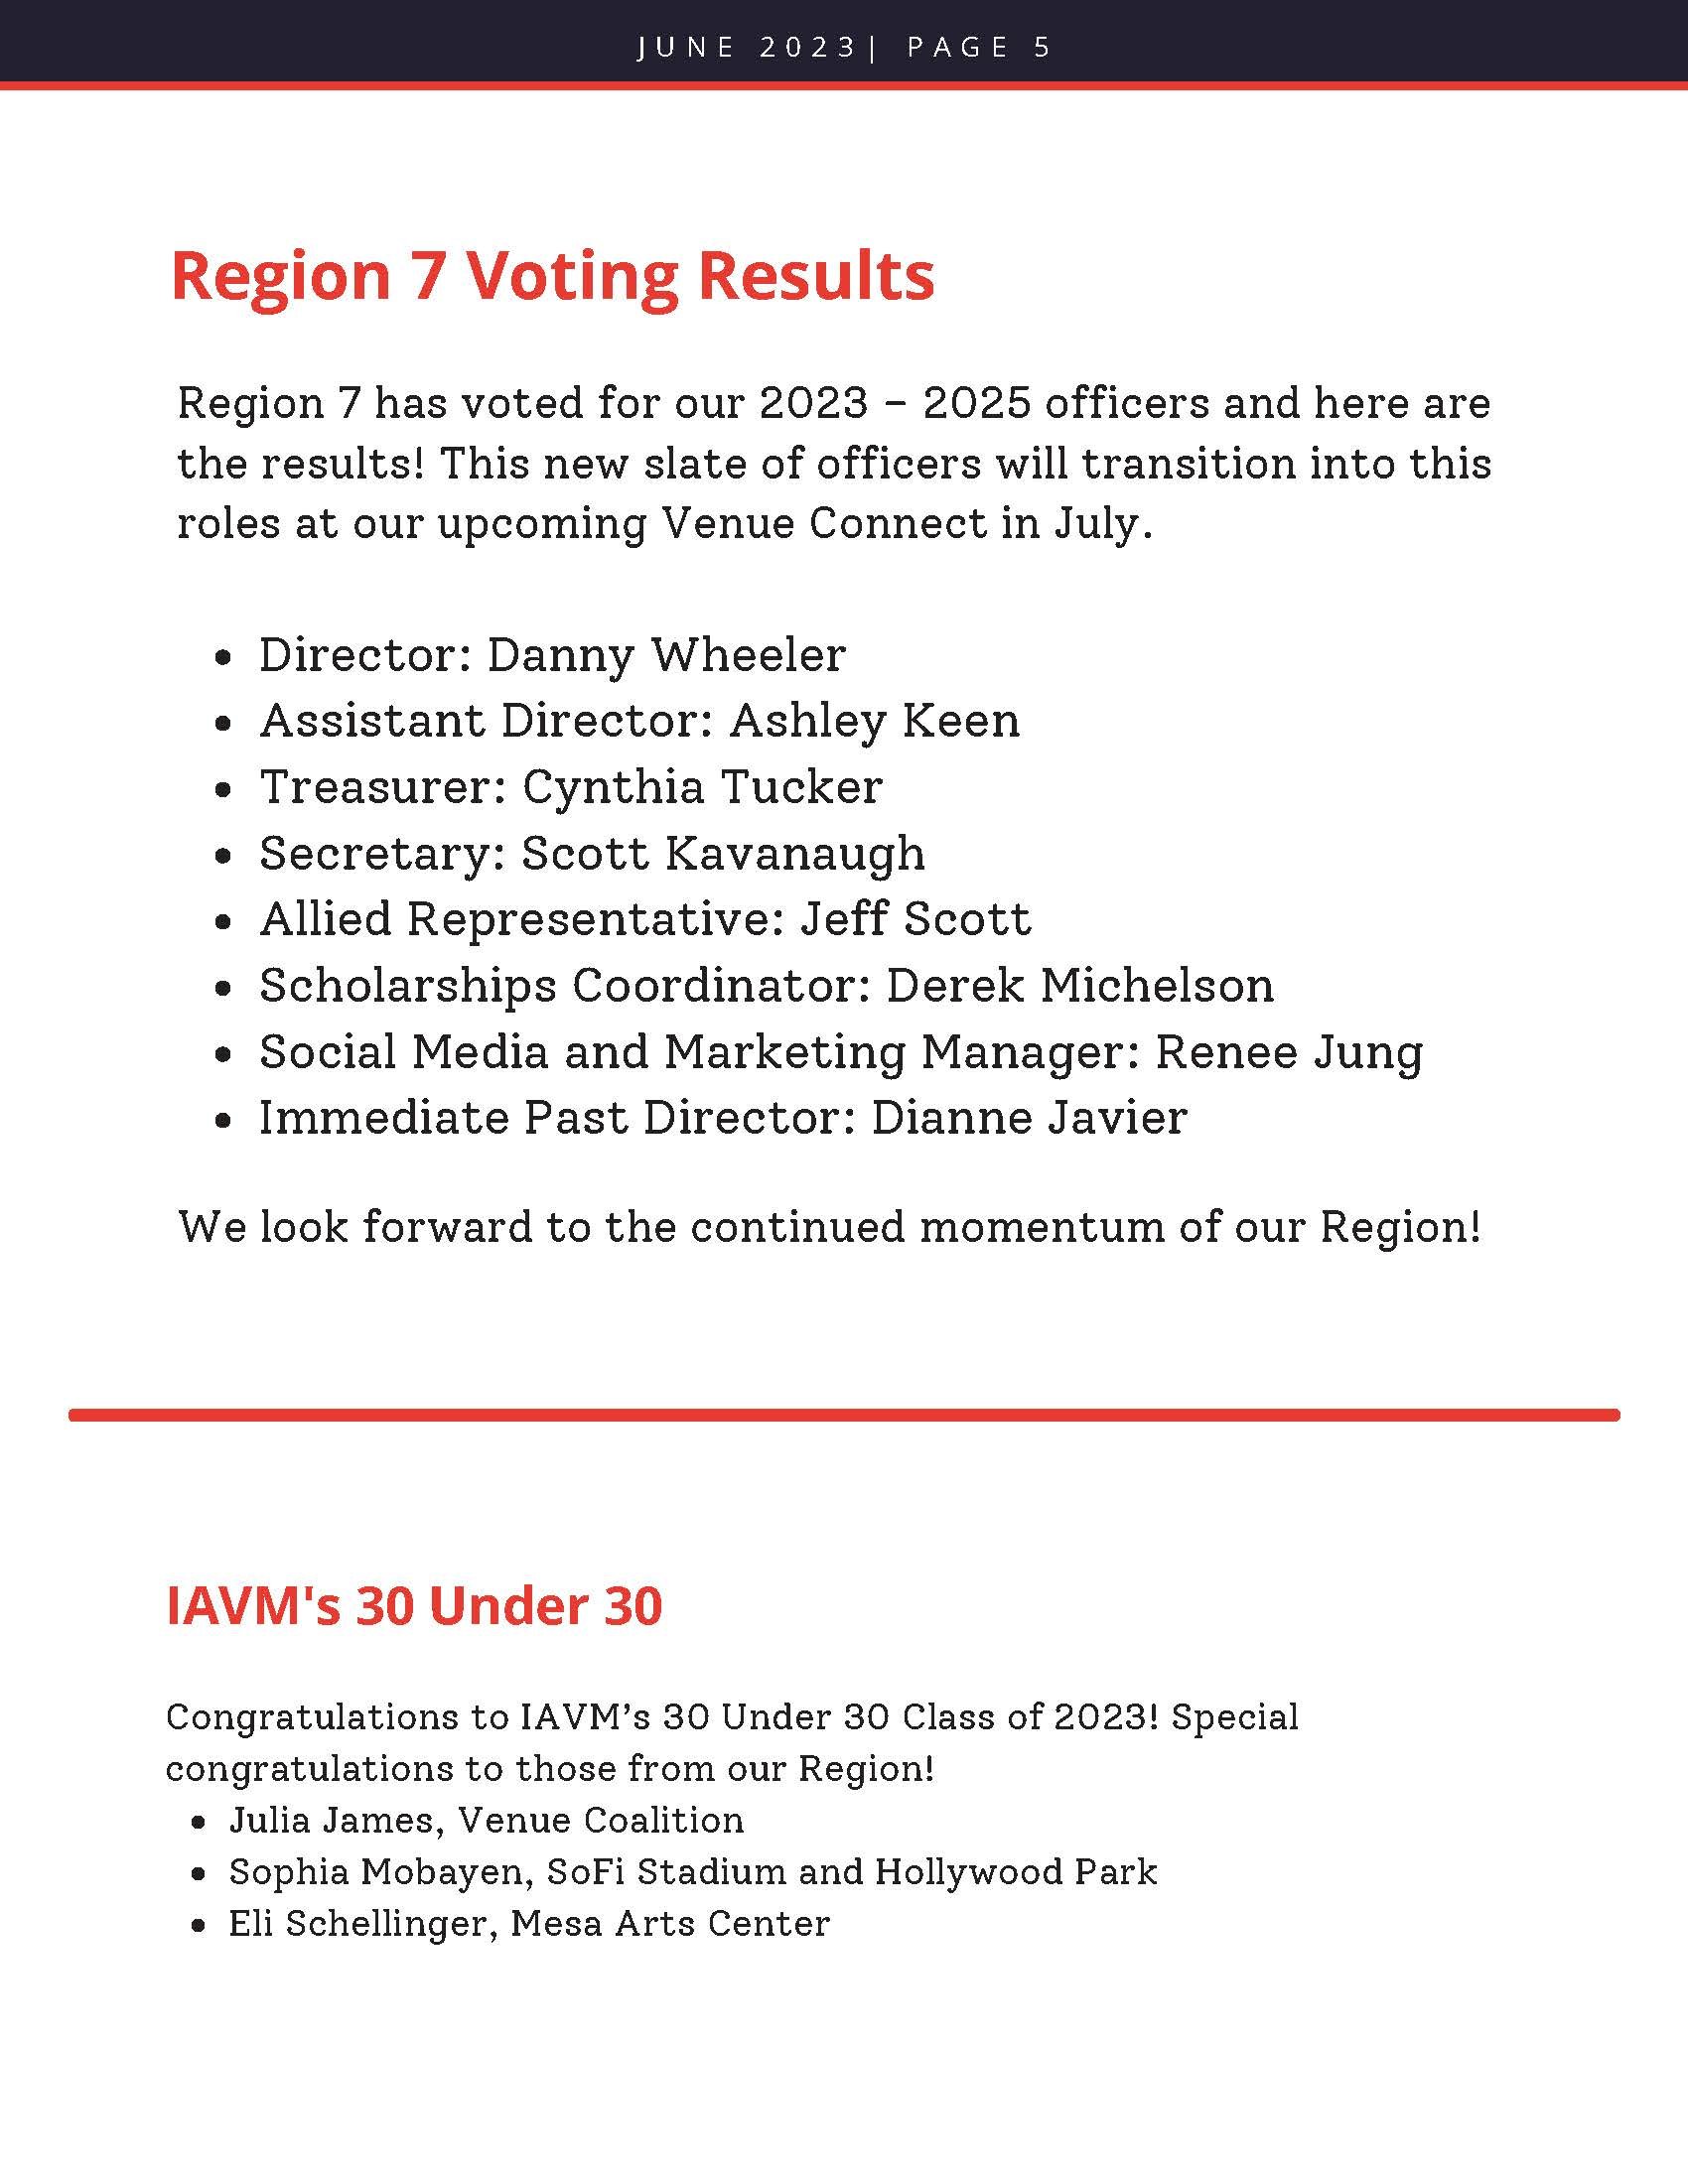 IAVM Region 7 Newsletter June 2023_Page_06.jpg